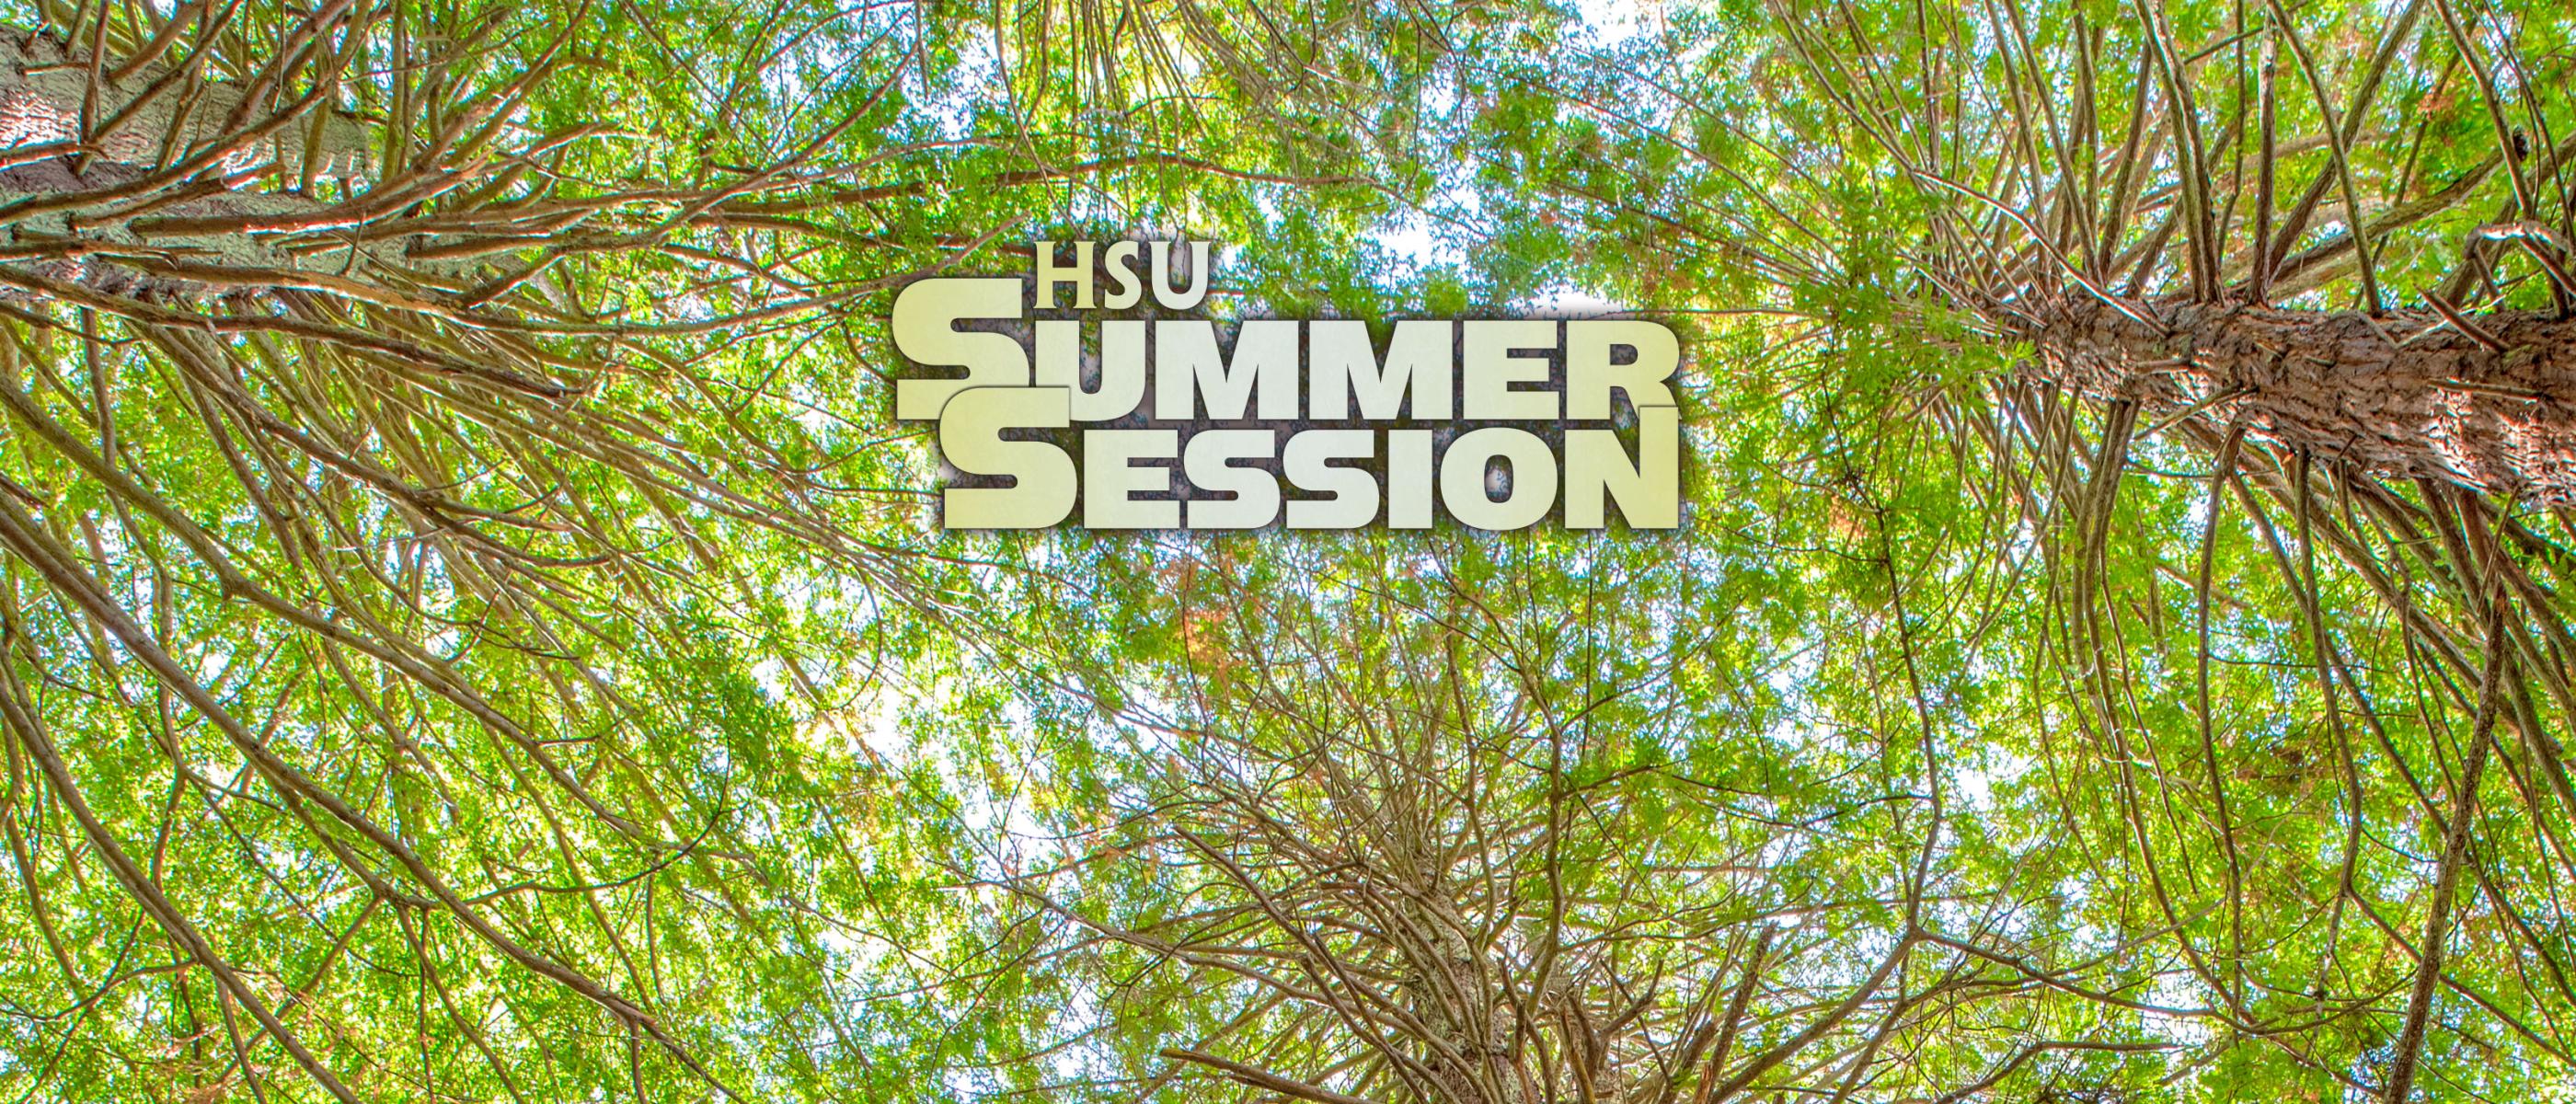 HSU Summer Session